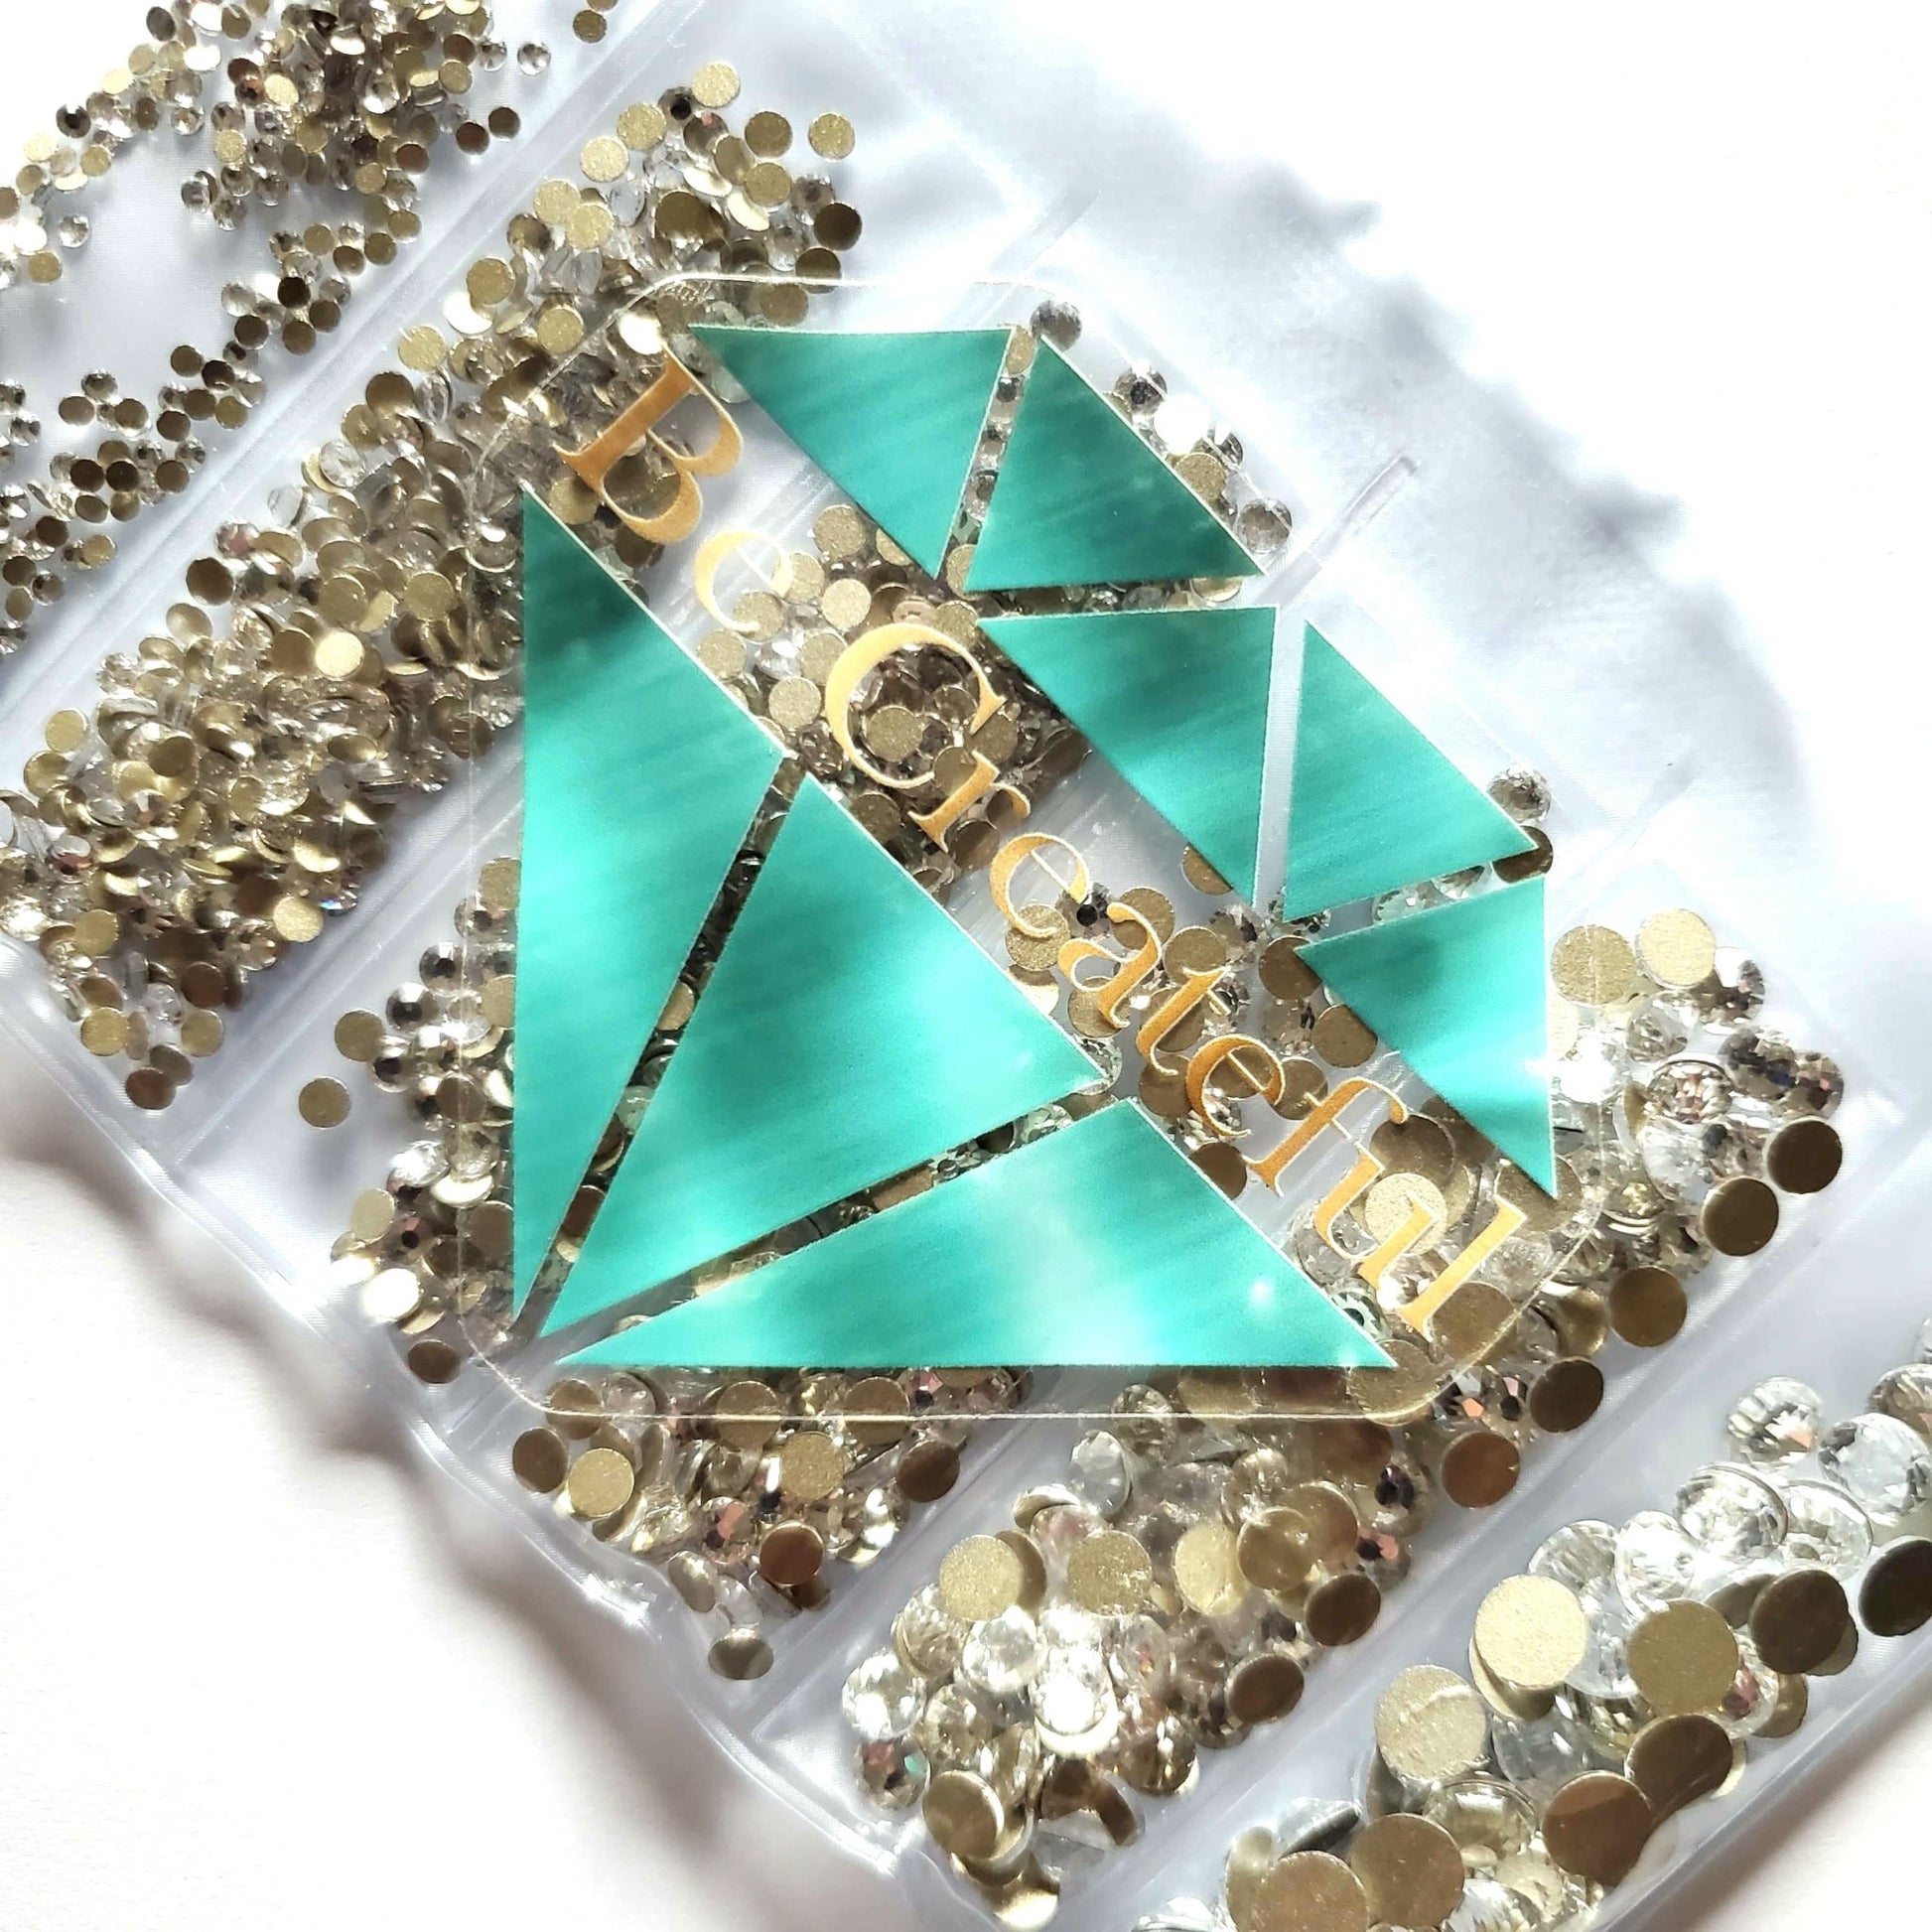 Be Createful - Flatback Foil Crystal Glass Rhinestones